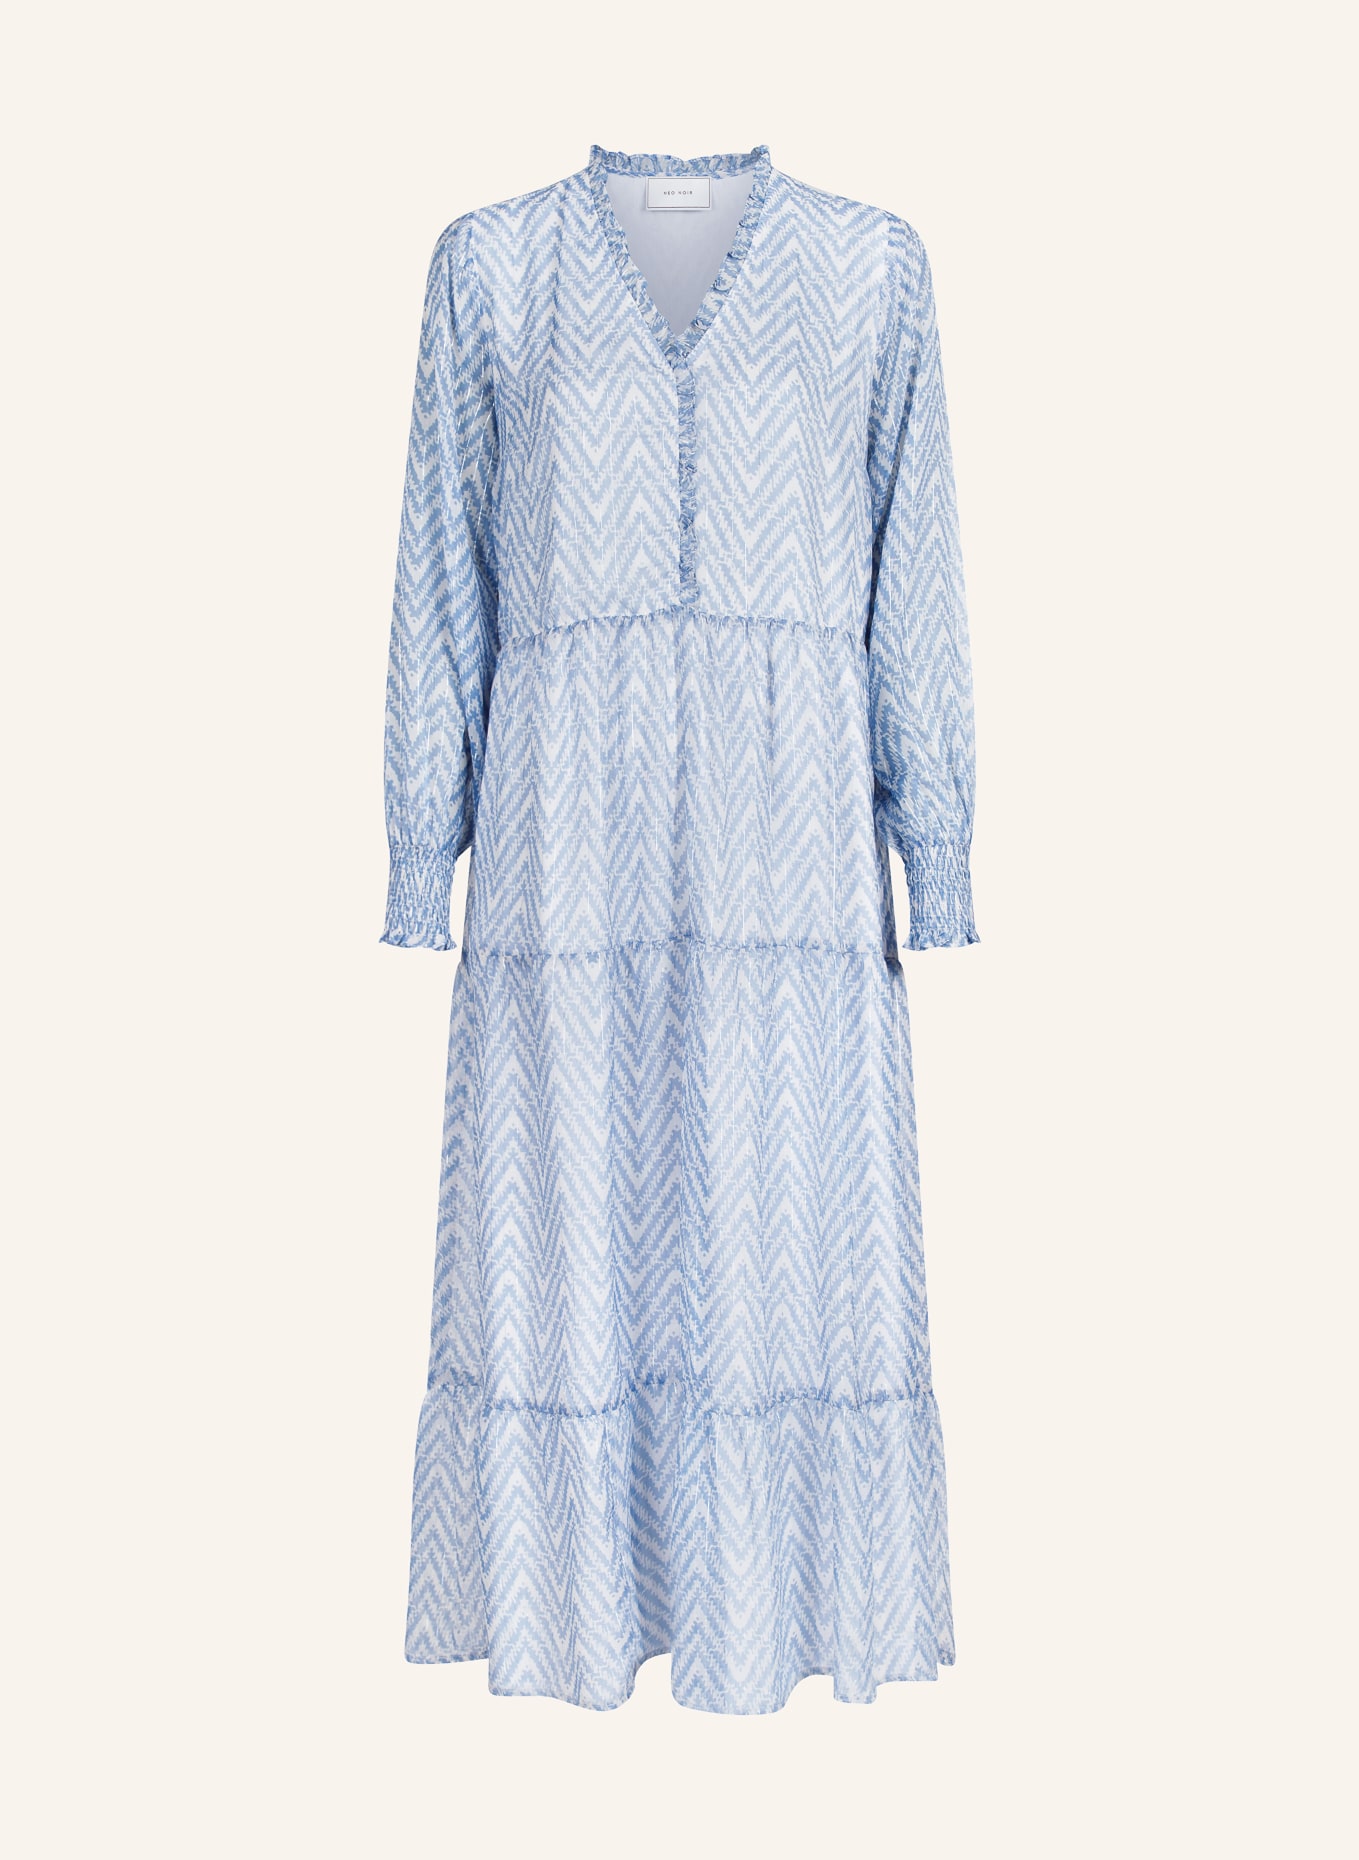 NEO NOIR Kleid KOBIA, Farbe: HELLBLAU (Bild 1)